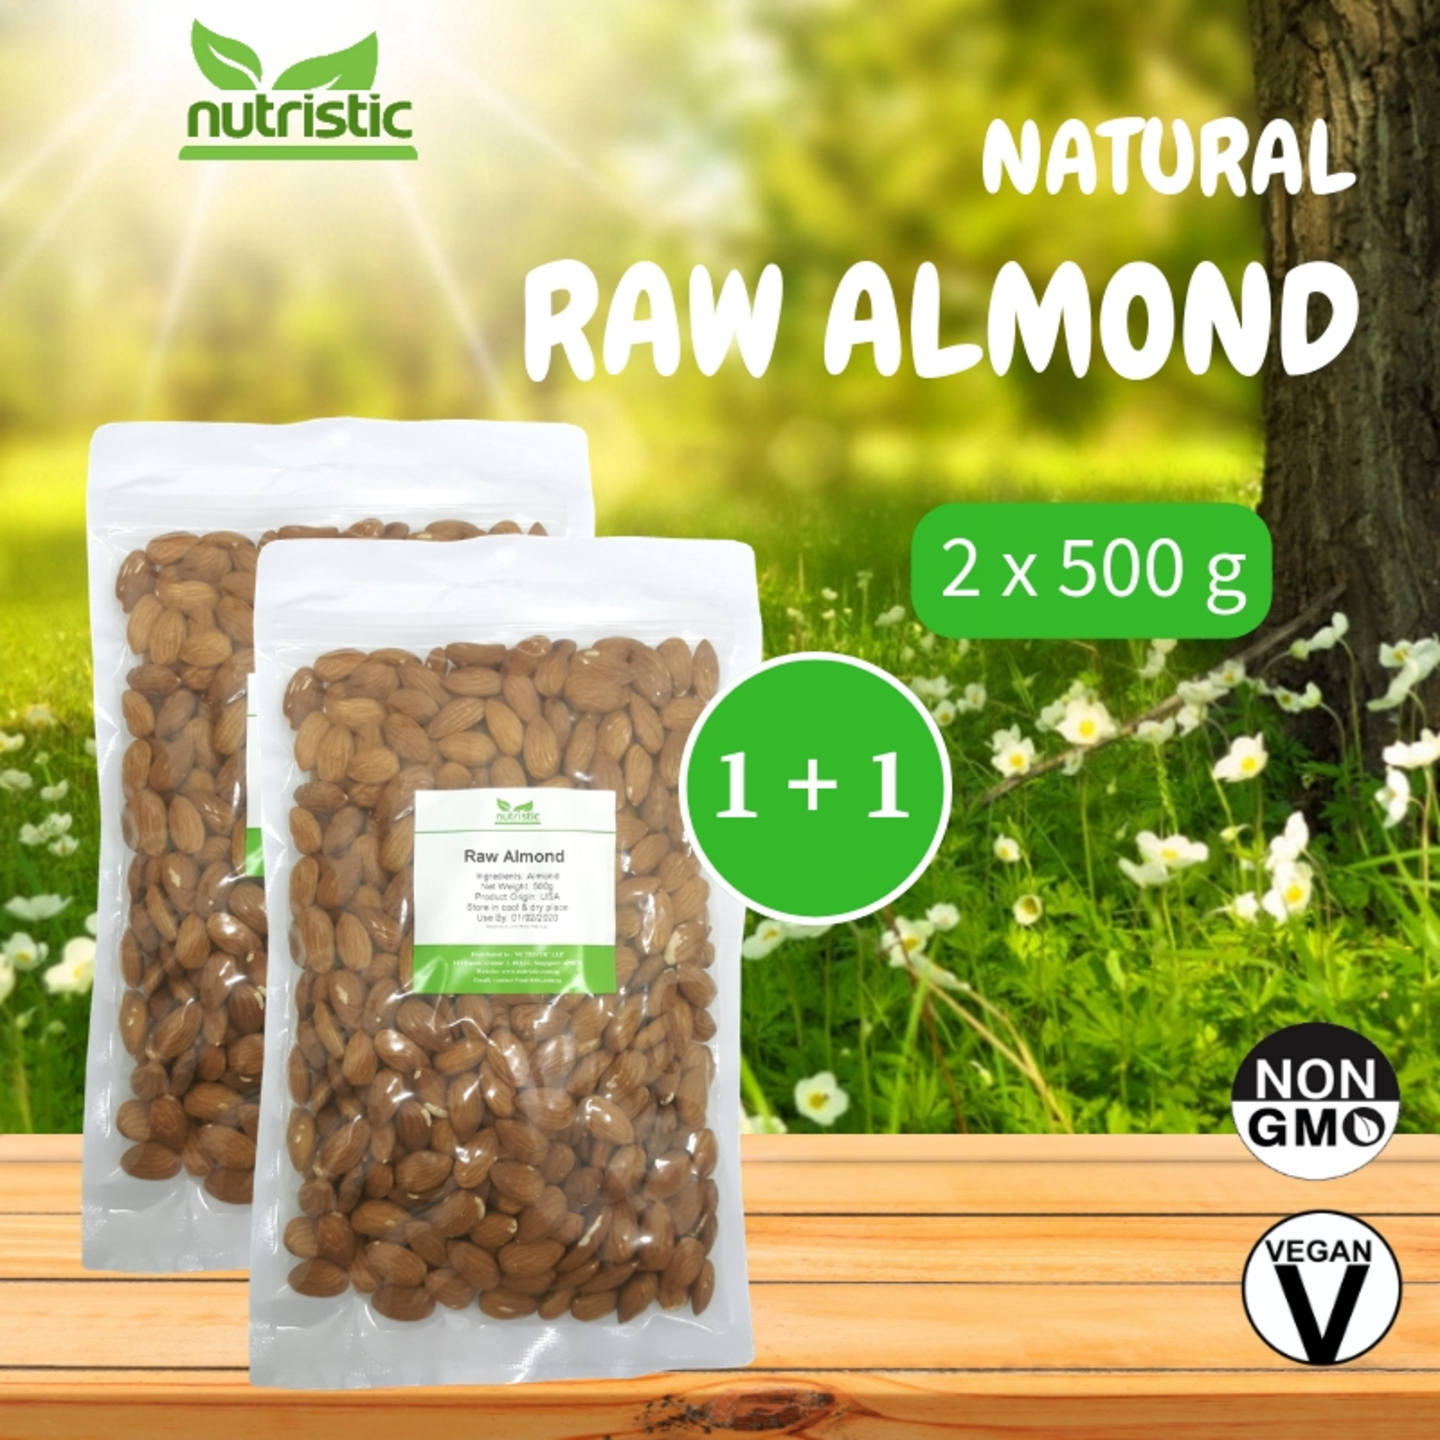 Natural Raw Almond 500g x2 - Value Bundle 1+1